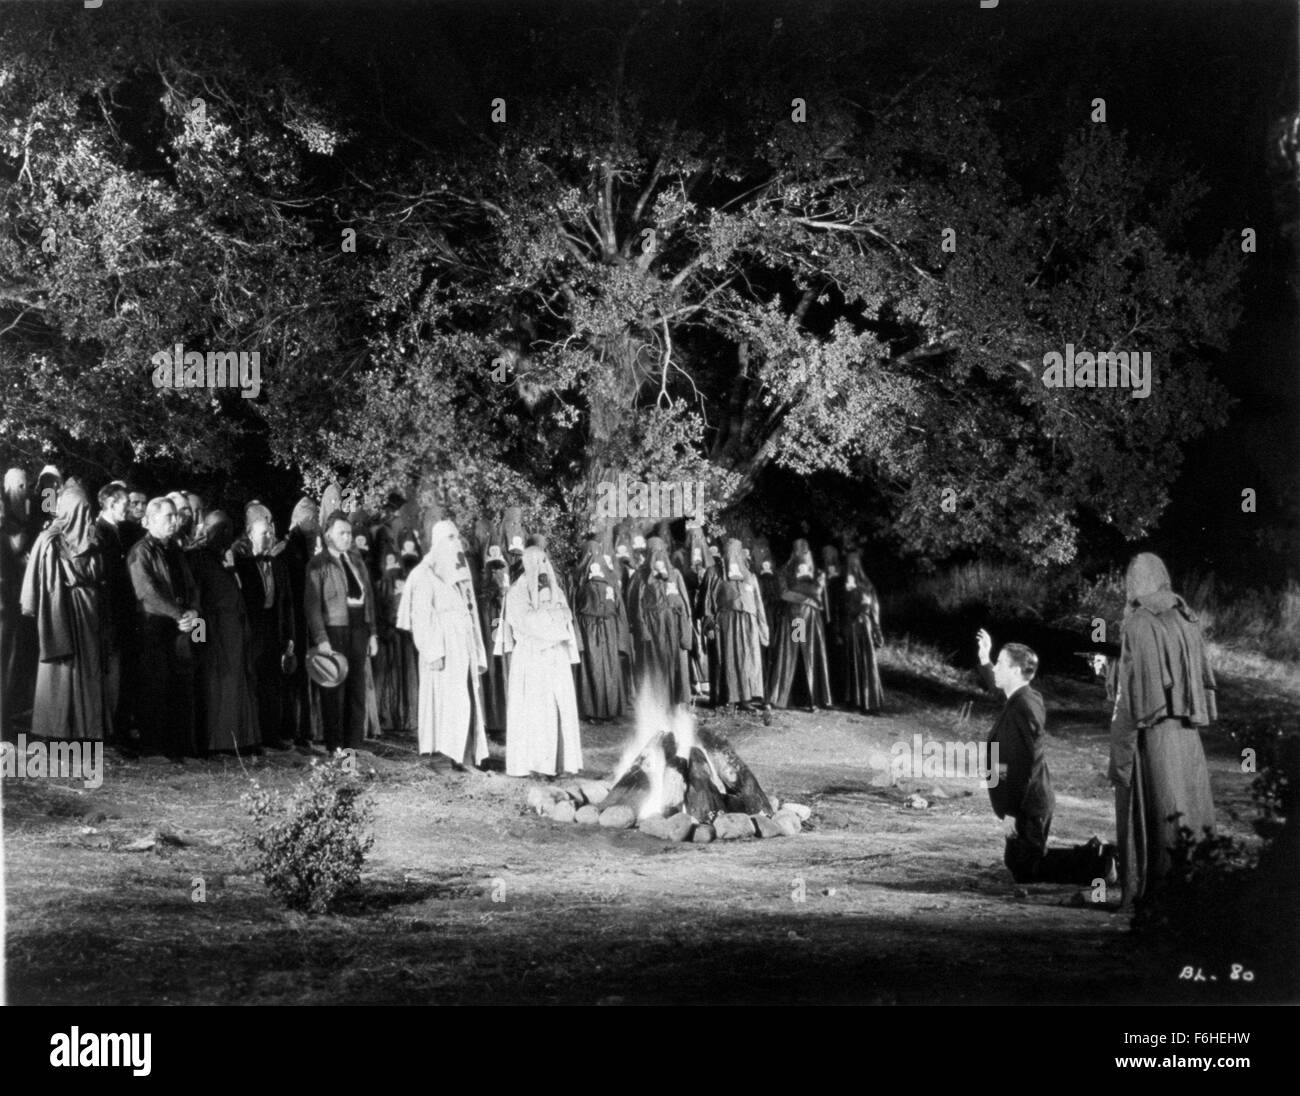 1937, Film Title: BLACK LEGION, Director: ARCHIE MAYO, Studio: WARNER, Pictured: HUMPHREY BOGART, ENSEMBLE, KKK, KLU KLUX KLAN, RACISM, ASSASSINATION, BONFIRE, ROBES, ROBE, DISGUISE, SHOOTING, GUN CRAZY, ANONYMITY. (Credit Image: SNAP) Stock Photo